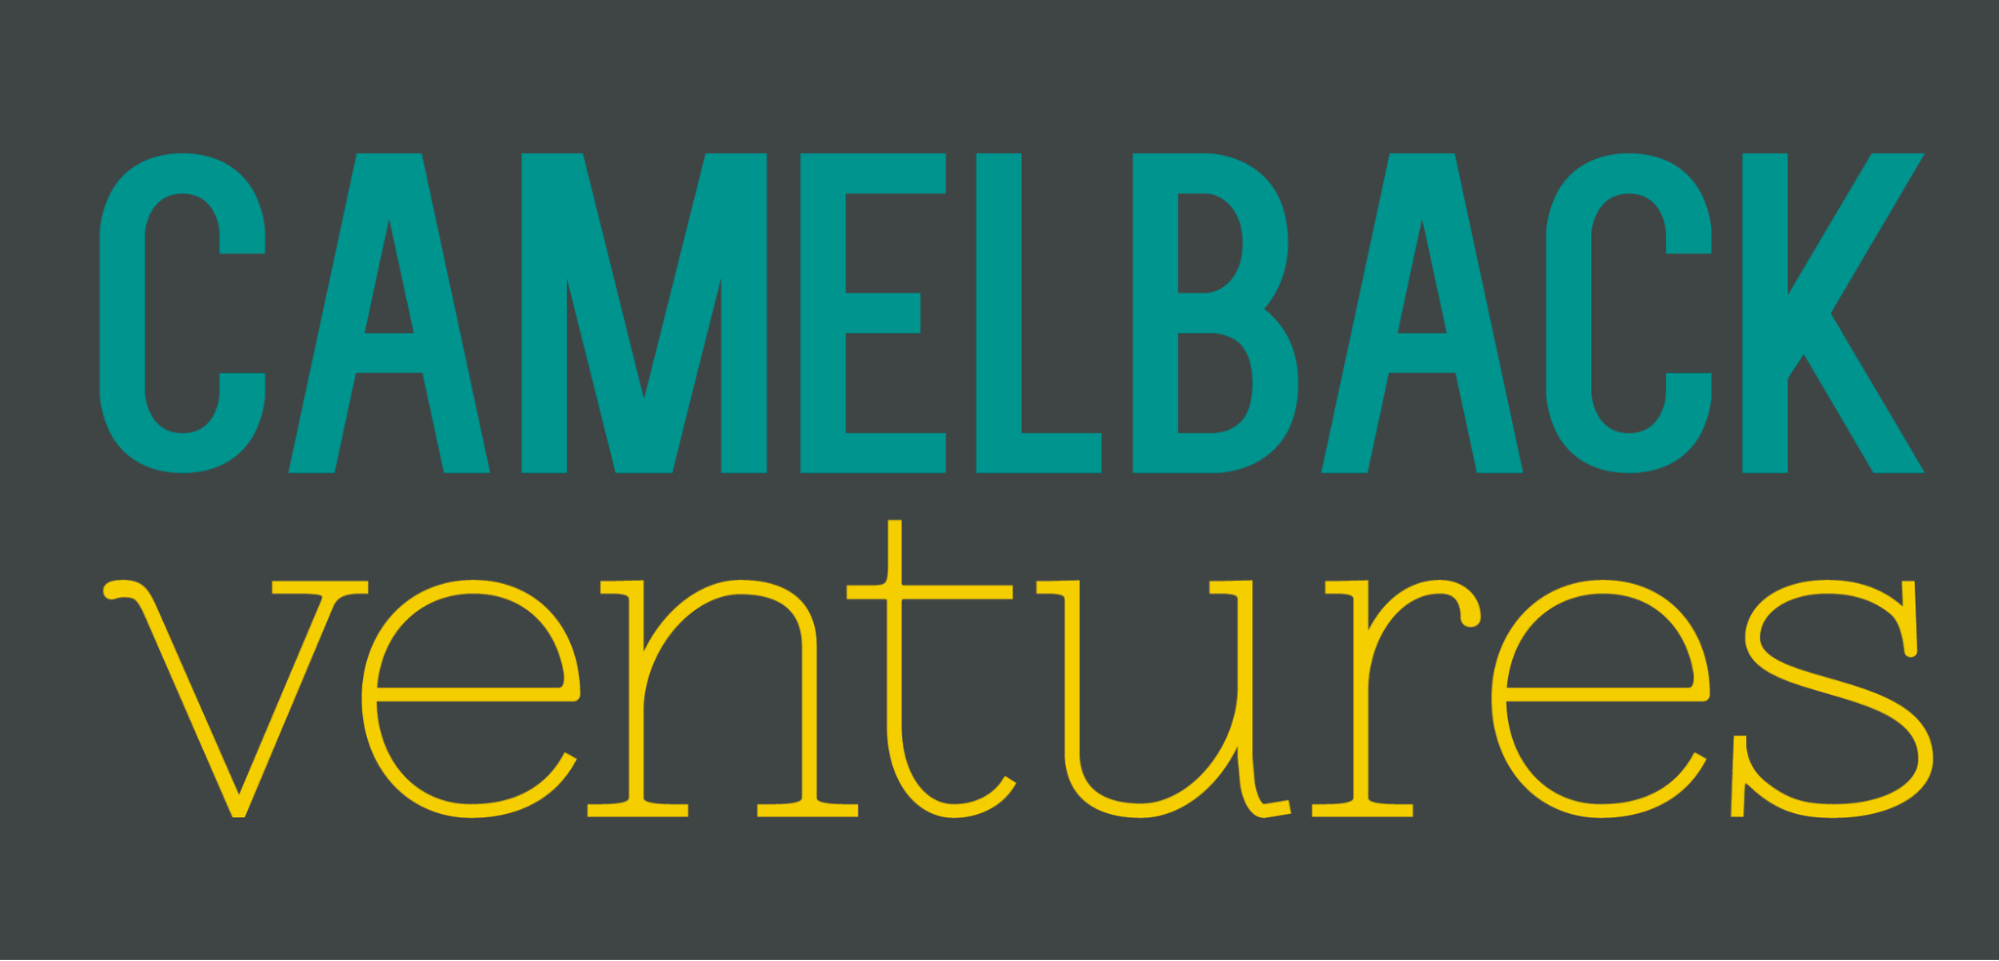 Camelback Ventures